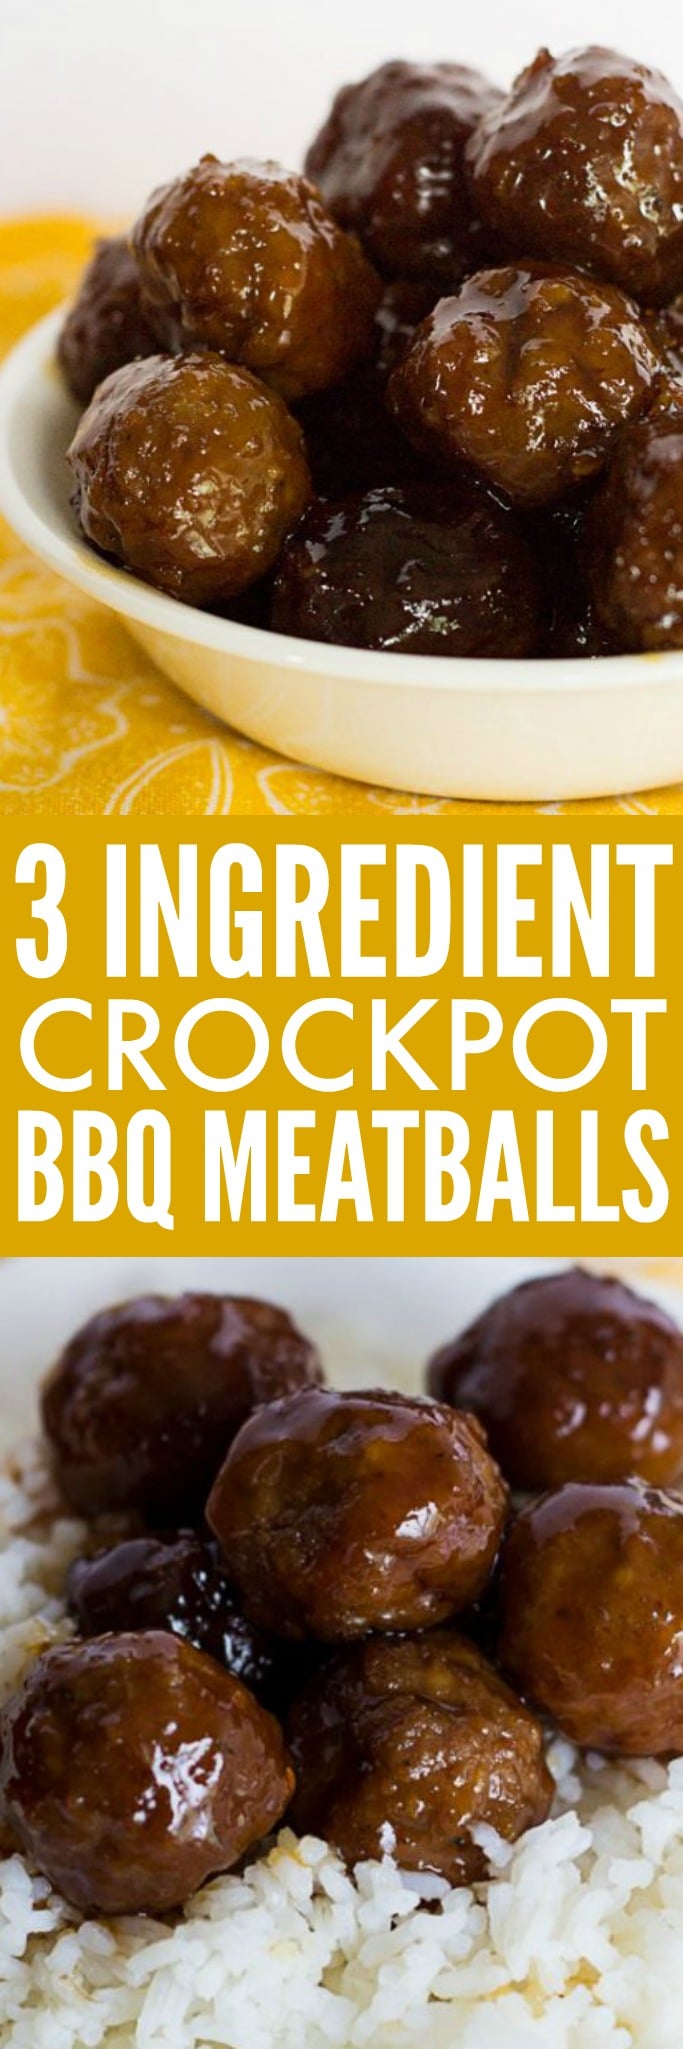 3-Ingredient Crockpot BBQ Meatballs with orange marmalade